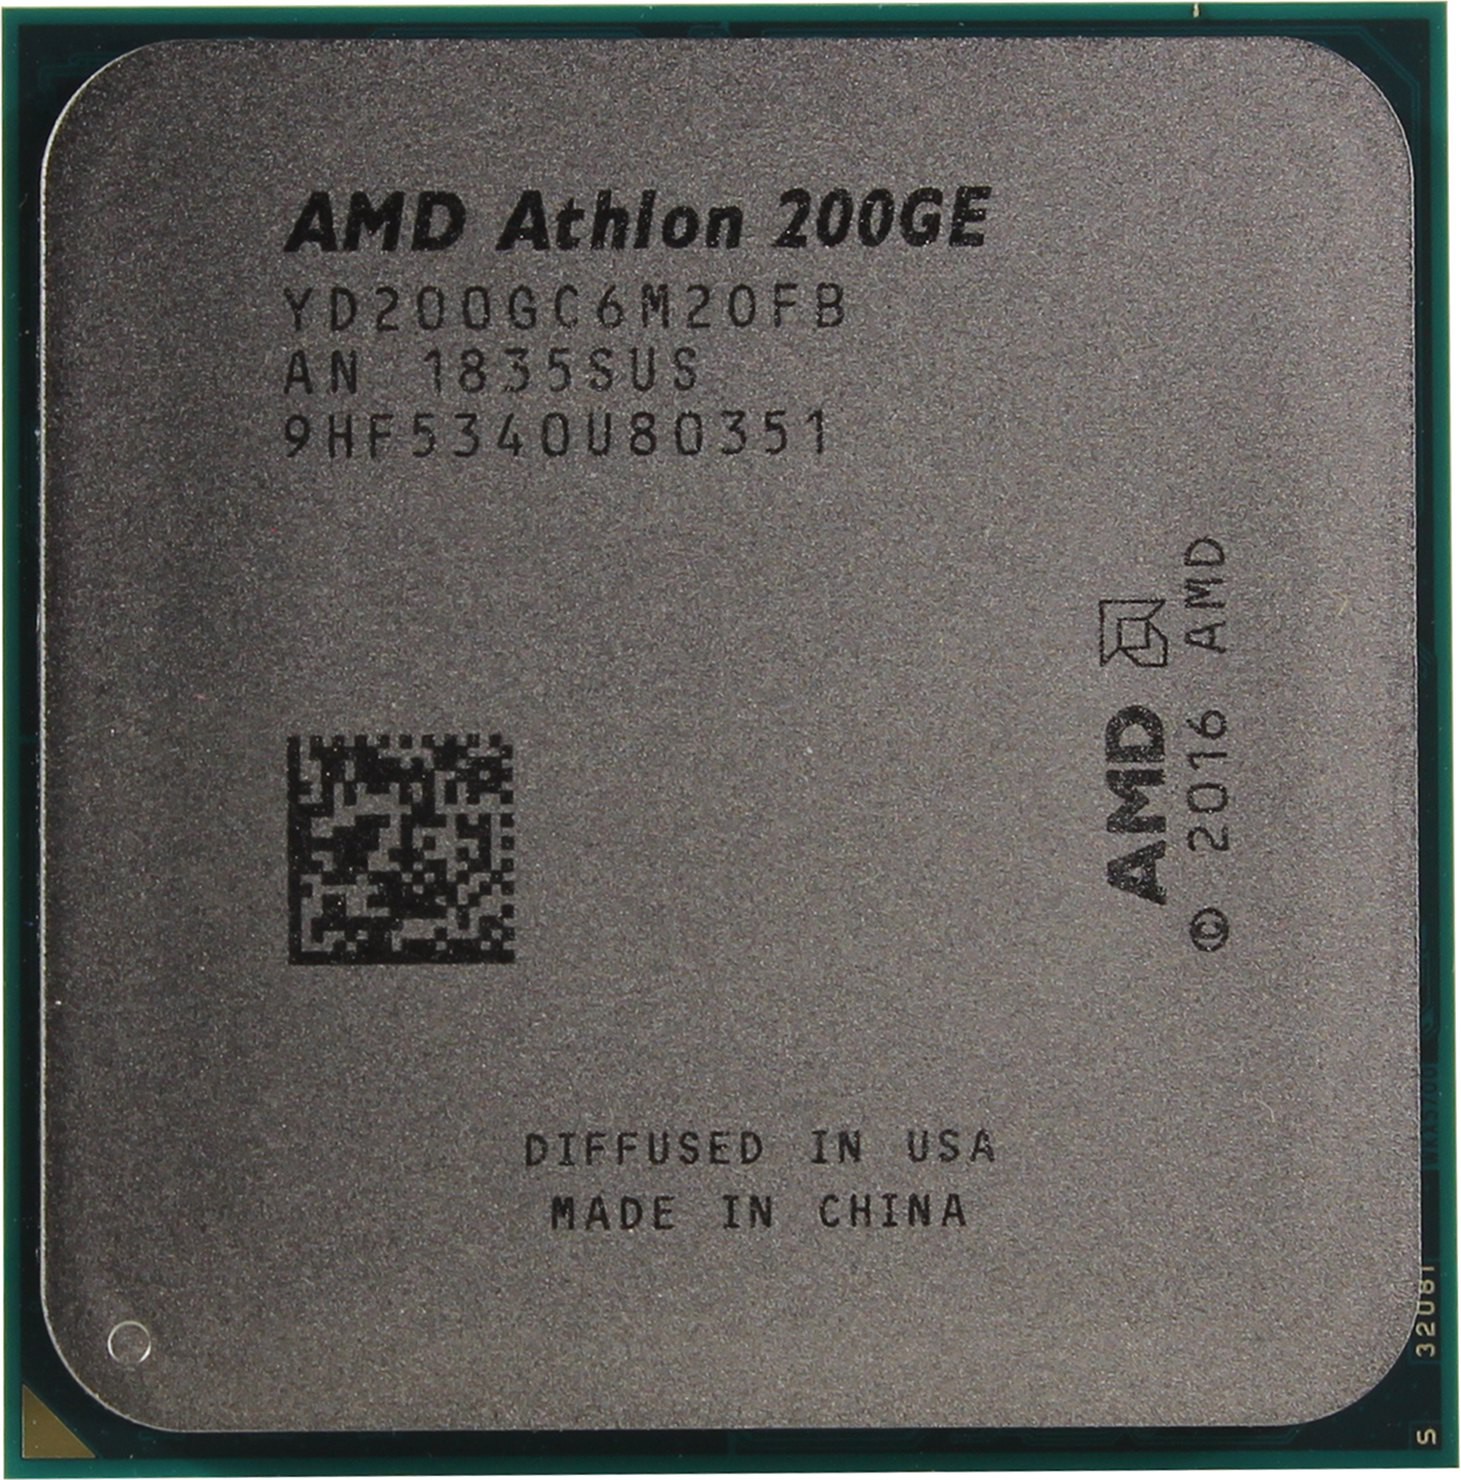  AMD Athlon 200GE (YD200GC6M2OFB)